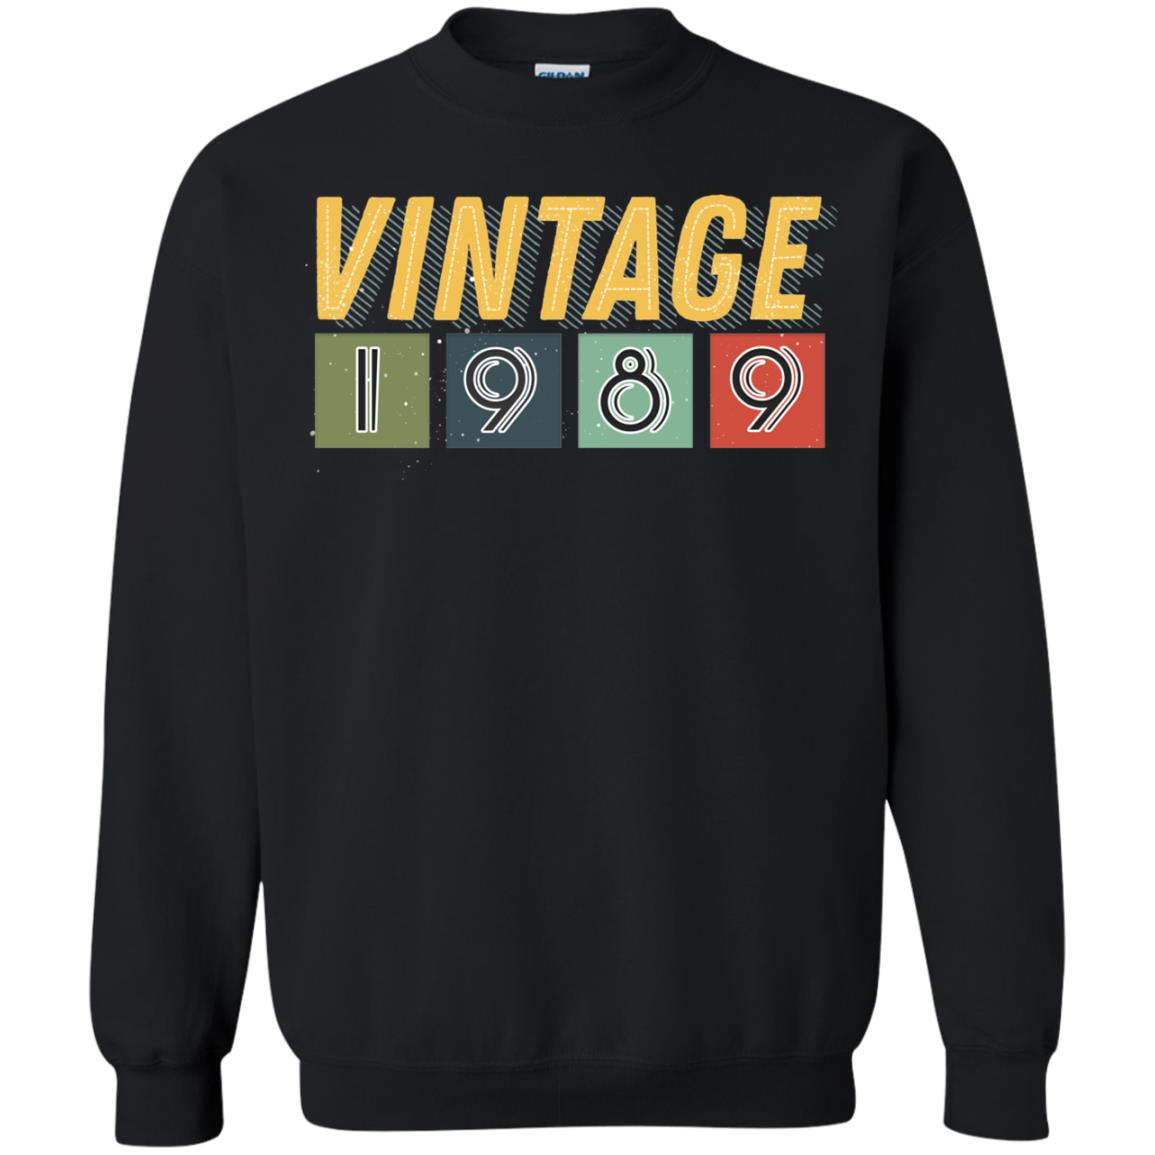 Vintage 1989 29th Birthday Gift Shirt For Mens Or WomensG180 Gildan Crewneck Pullover Sweatshirt 8 oz.